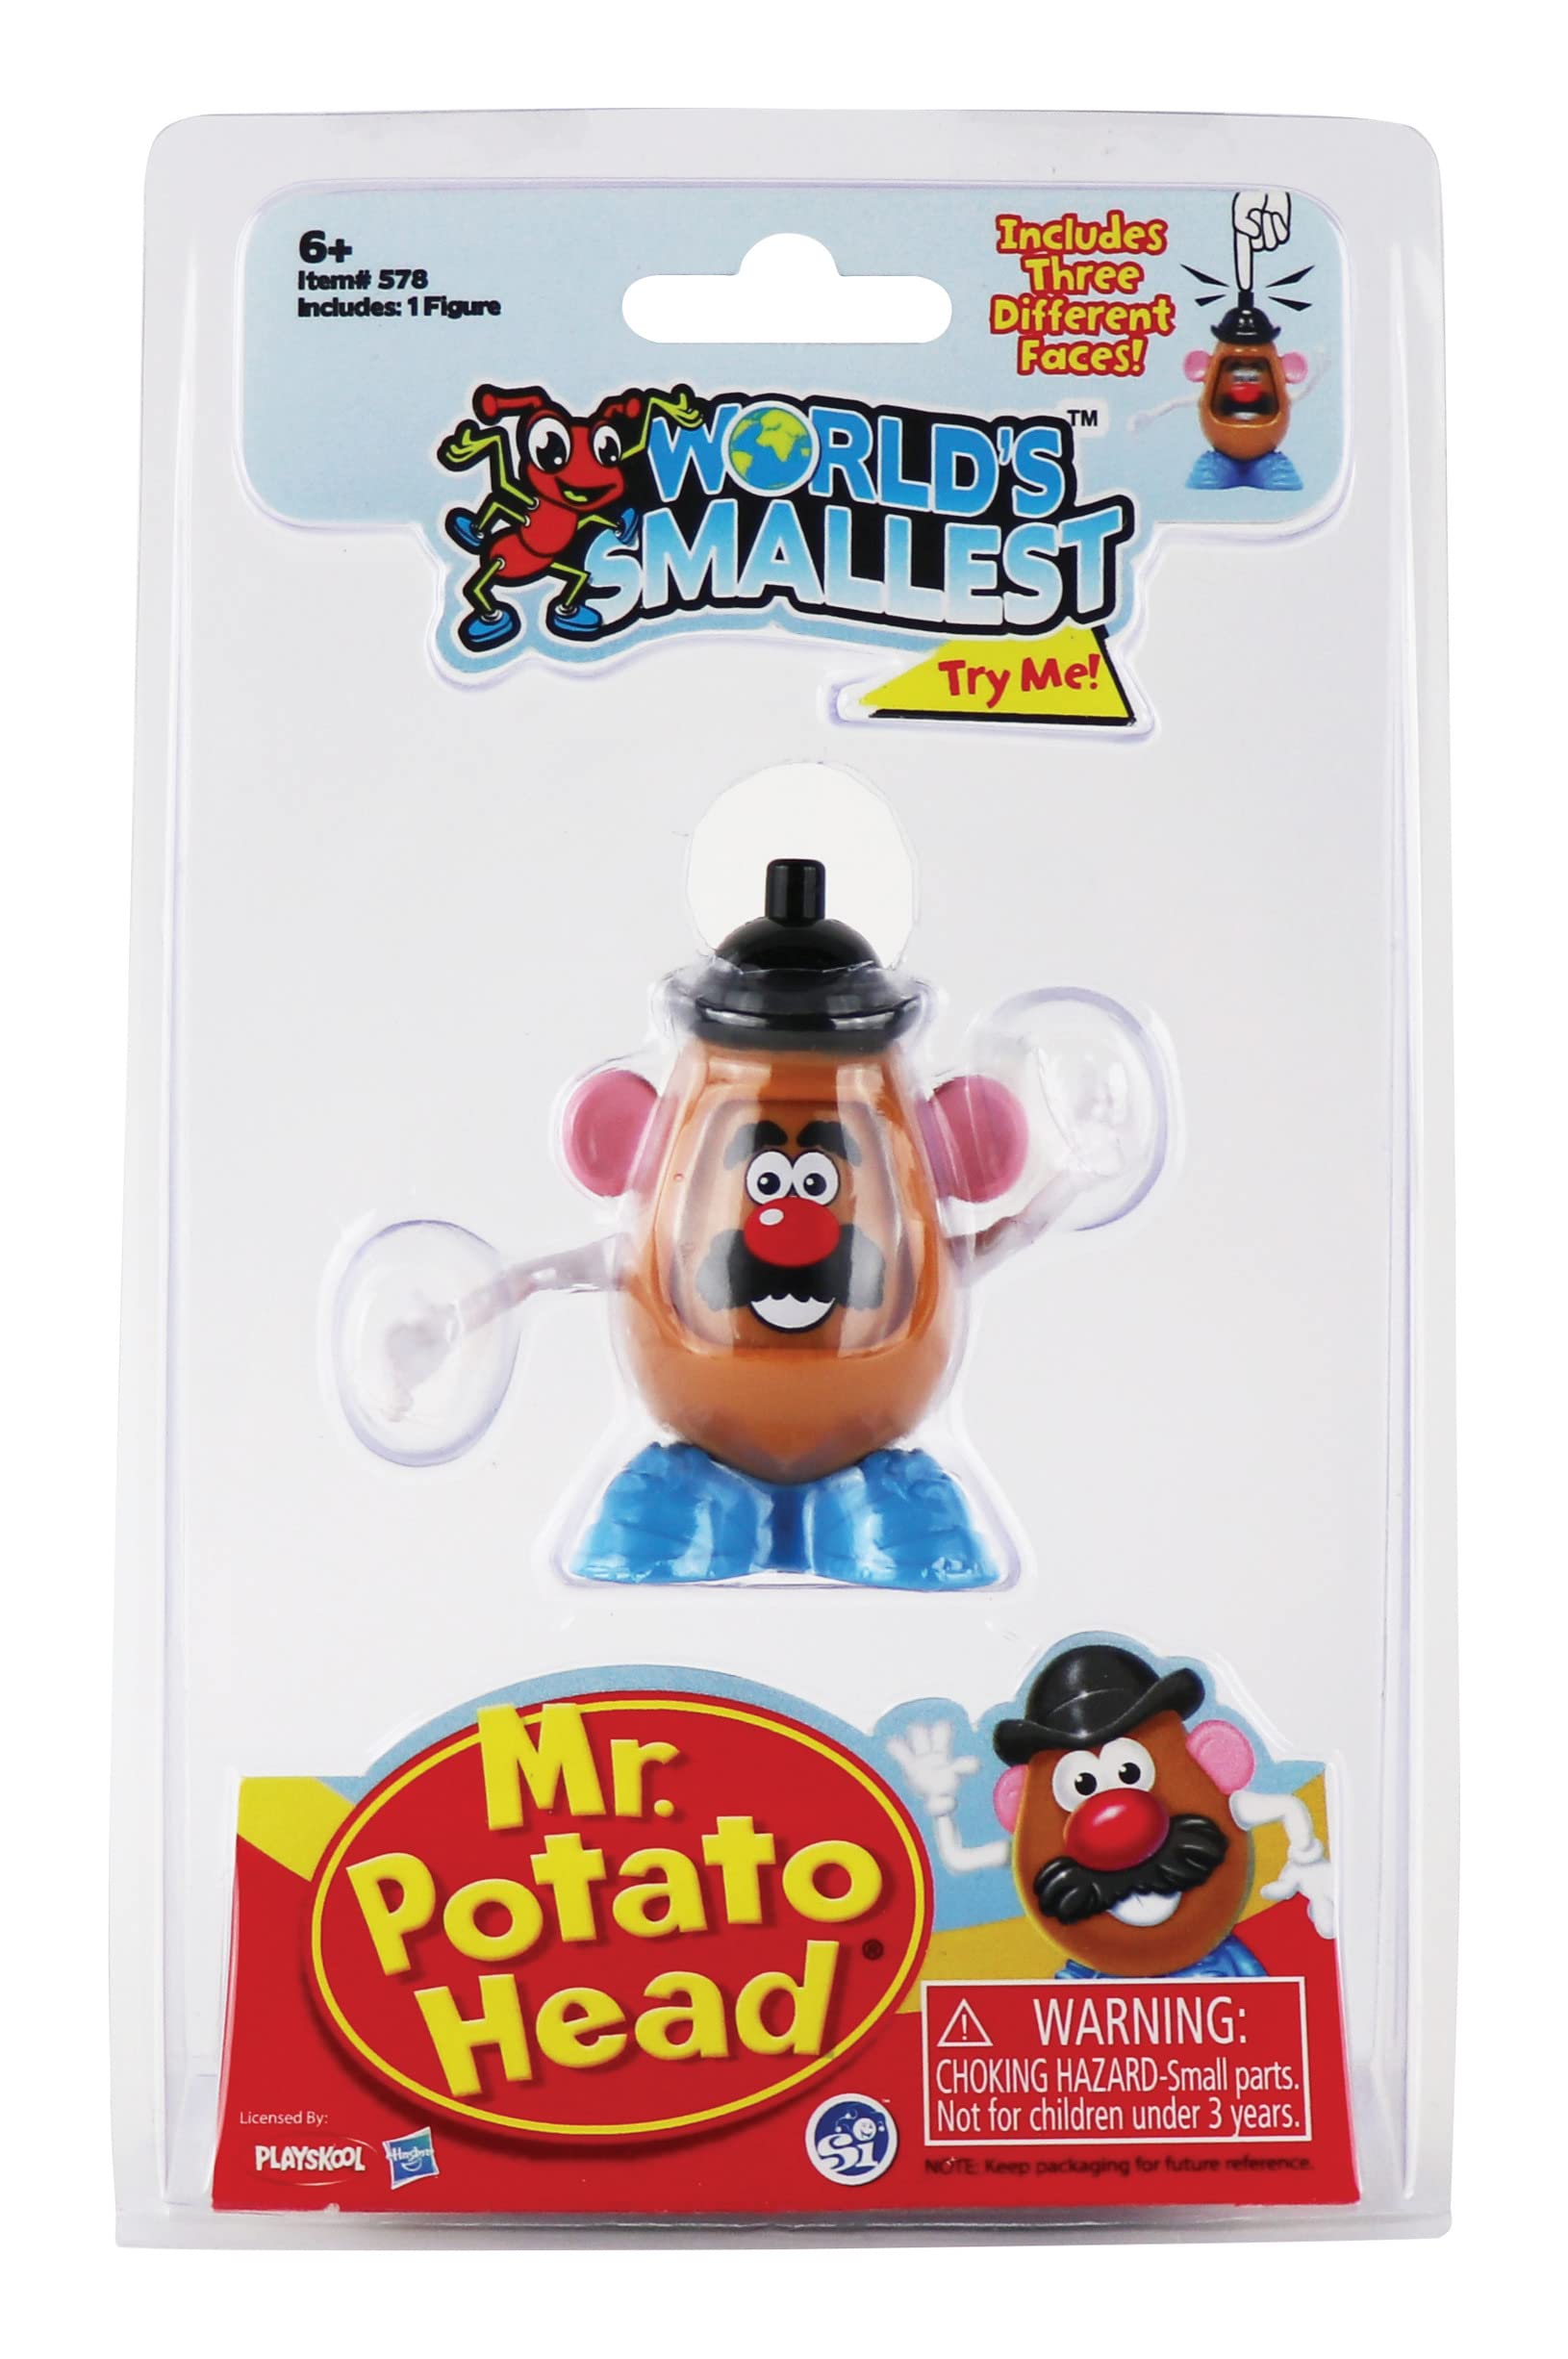 Worlds Smallest Mr Potato Head